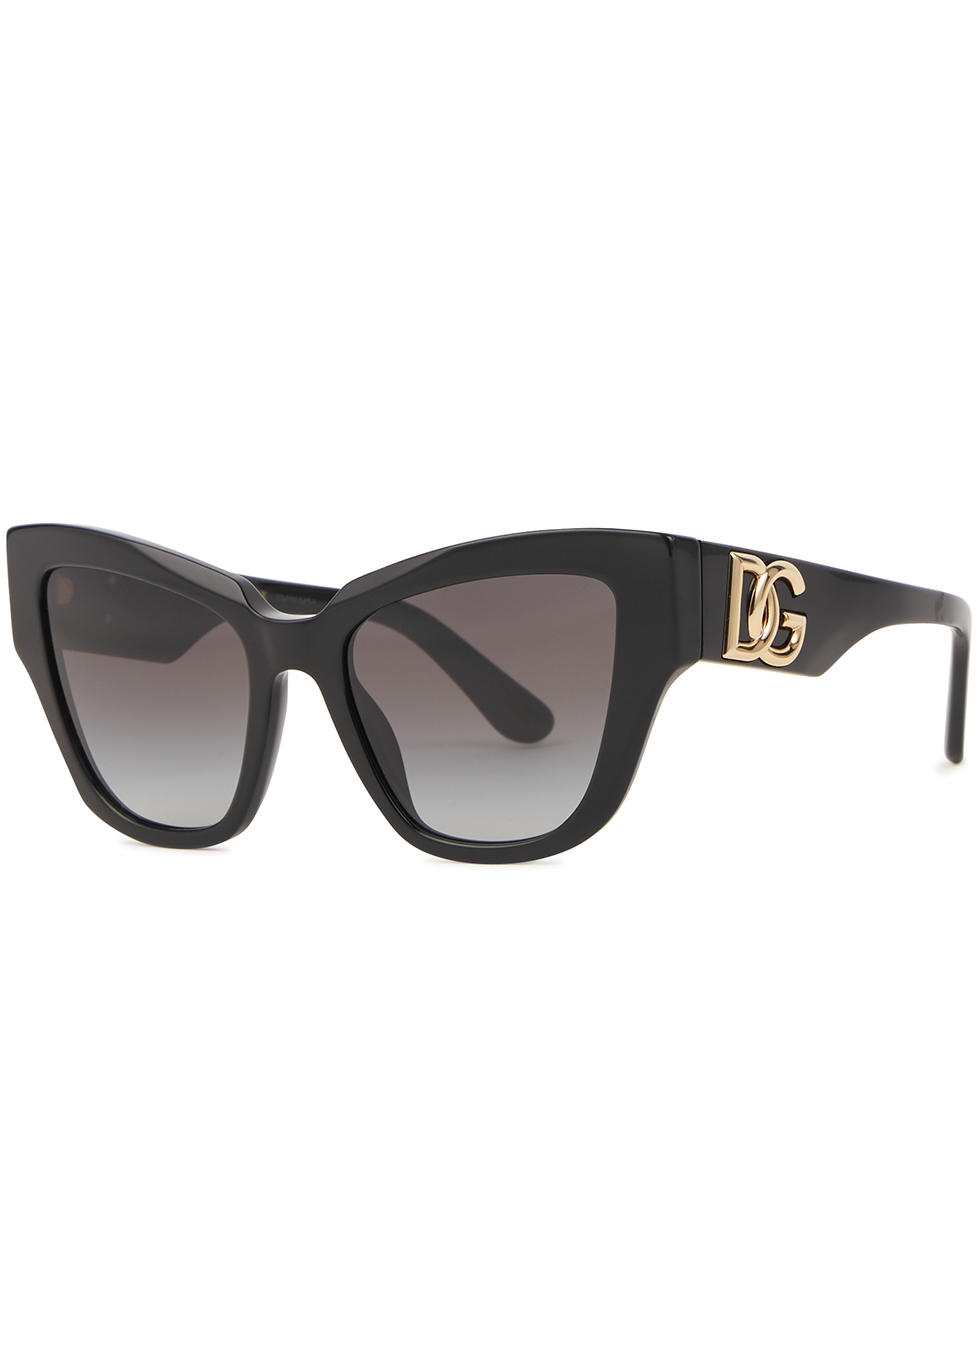 Dolce & Gabbana Black cat-eye sunglasses - Harvey Nichols